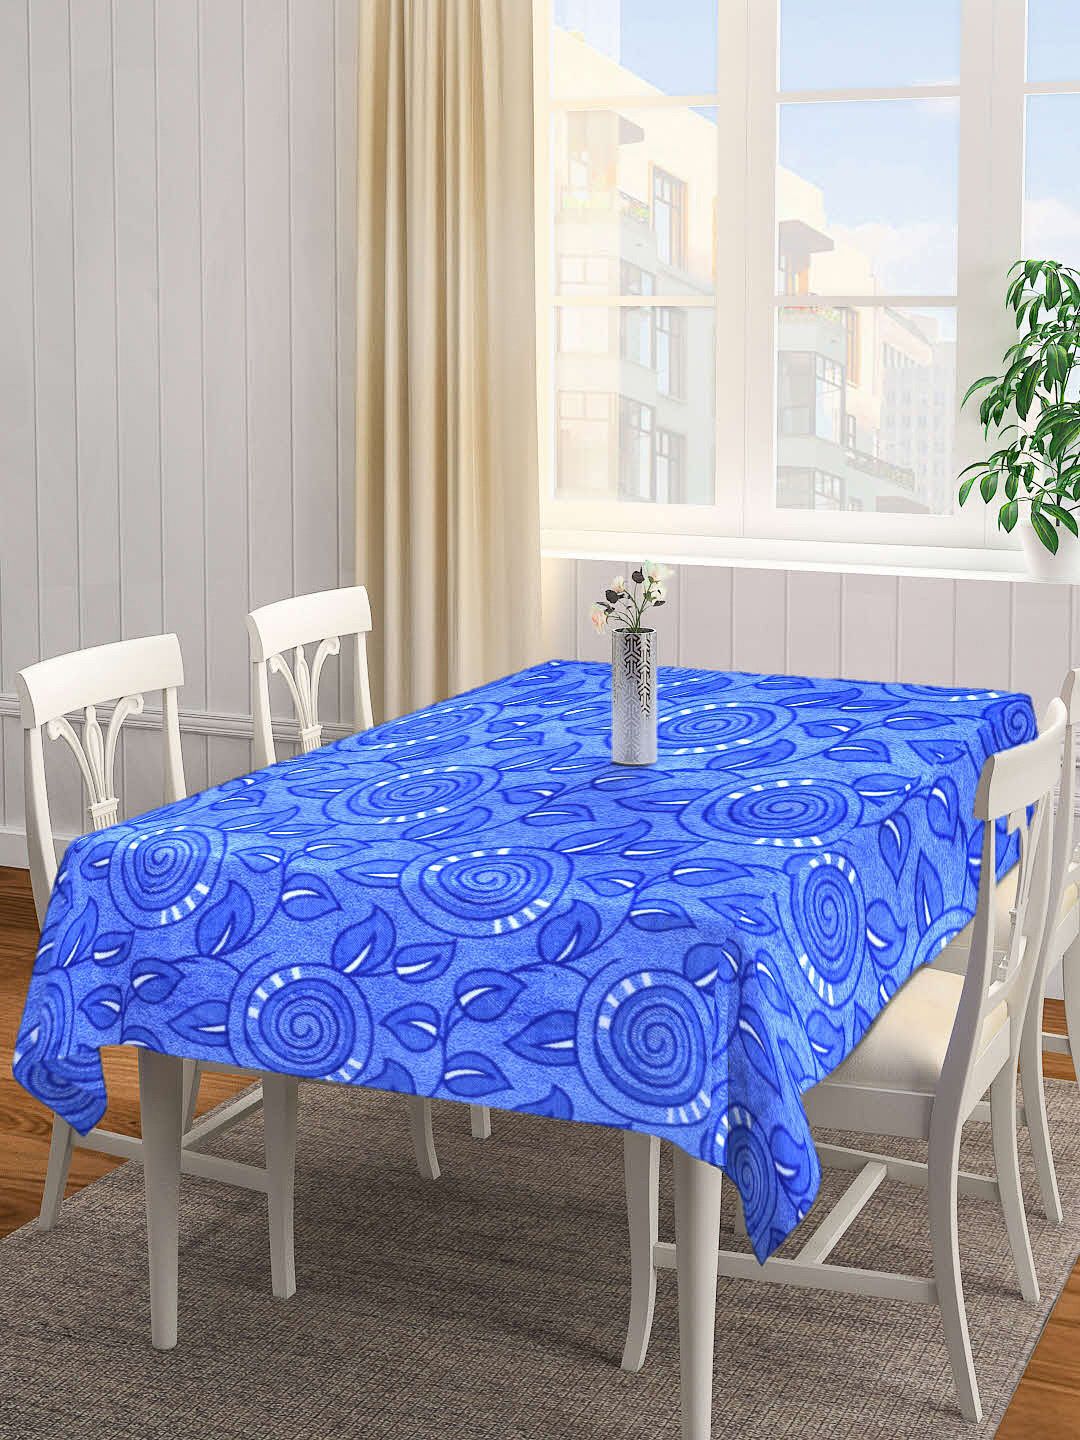 KLOTTHE Blue & White Woven Design 6 Seater Rectangular Table Cover Price in India